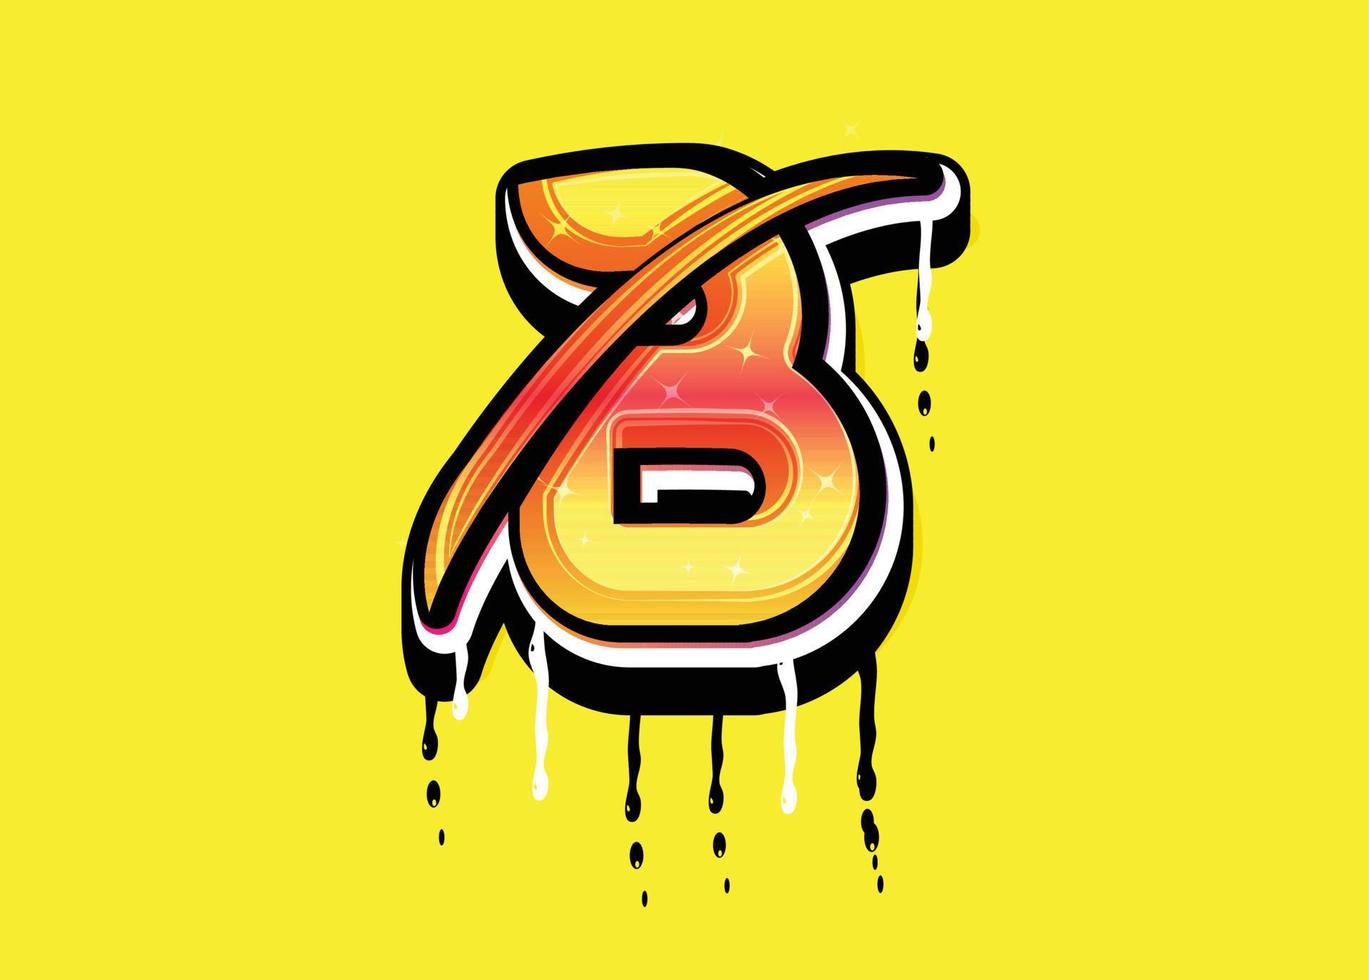 b lettera swoosh logo vettoriale